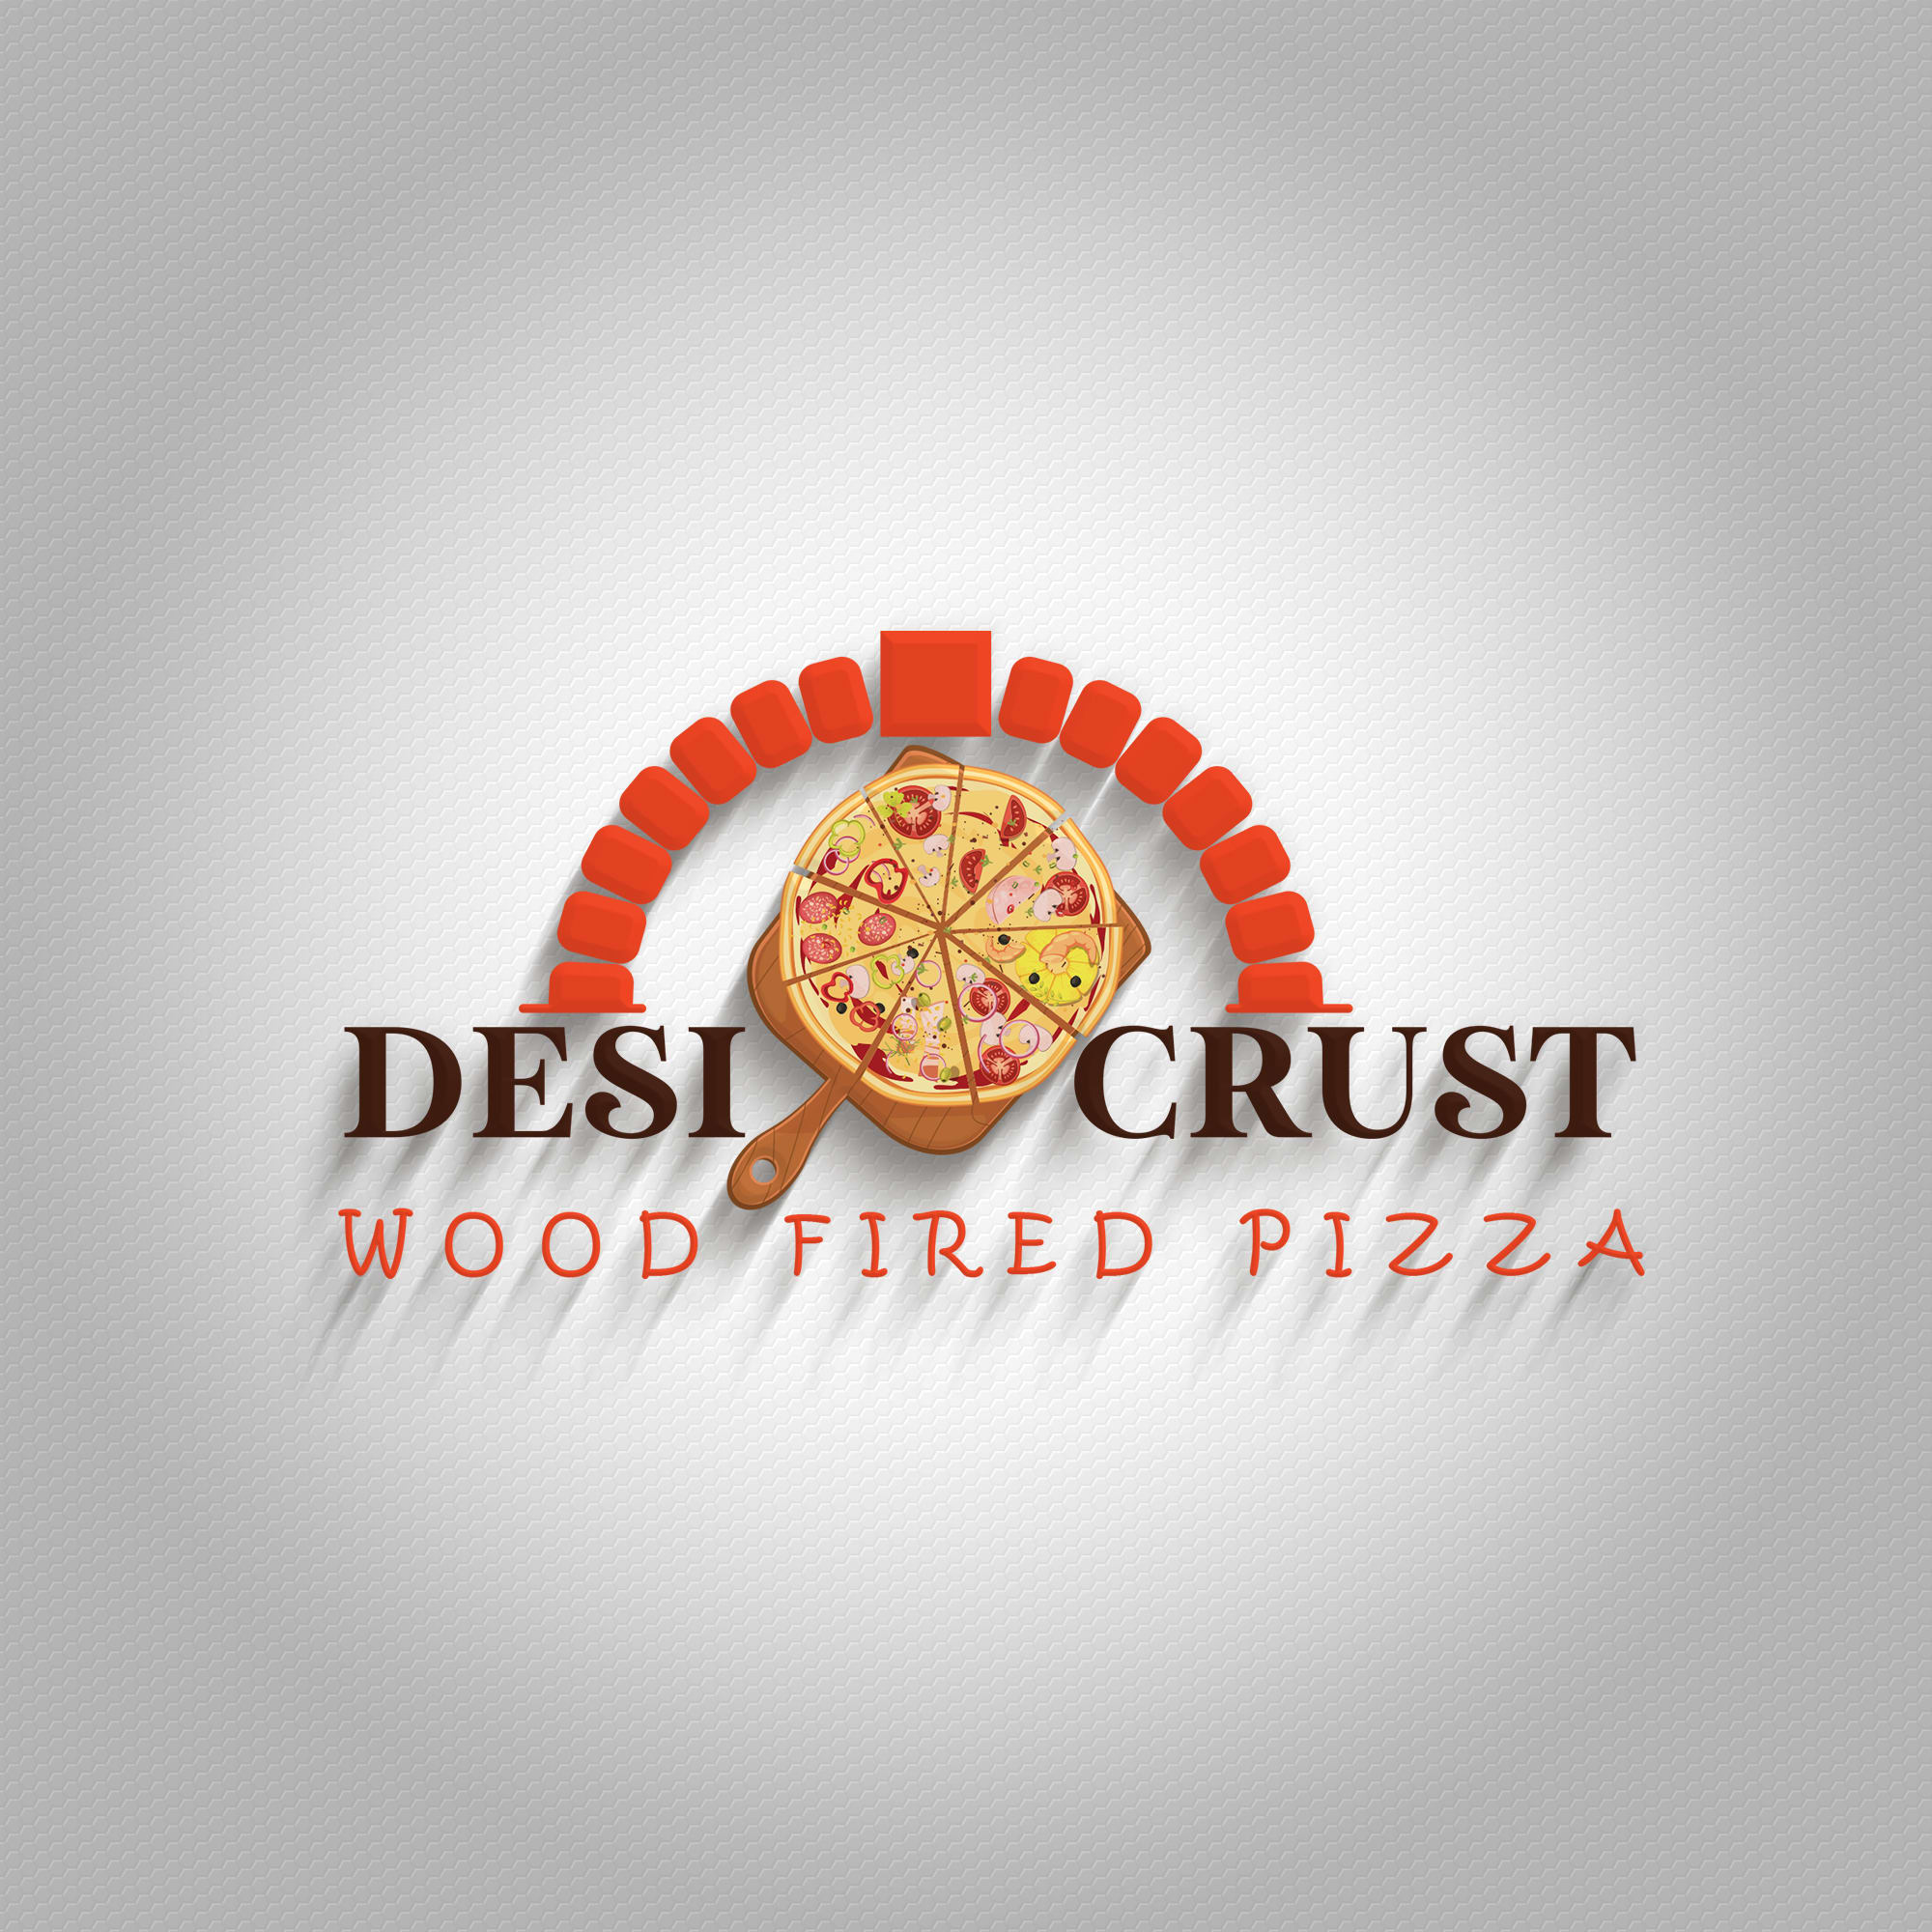 Desi Crust Wood Fired Pizza